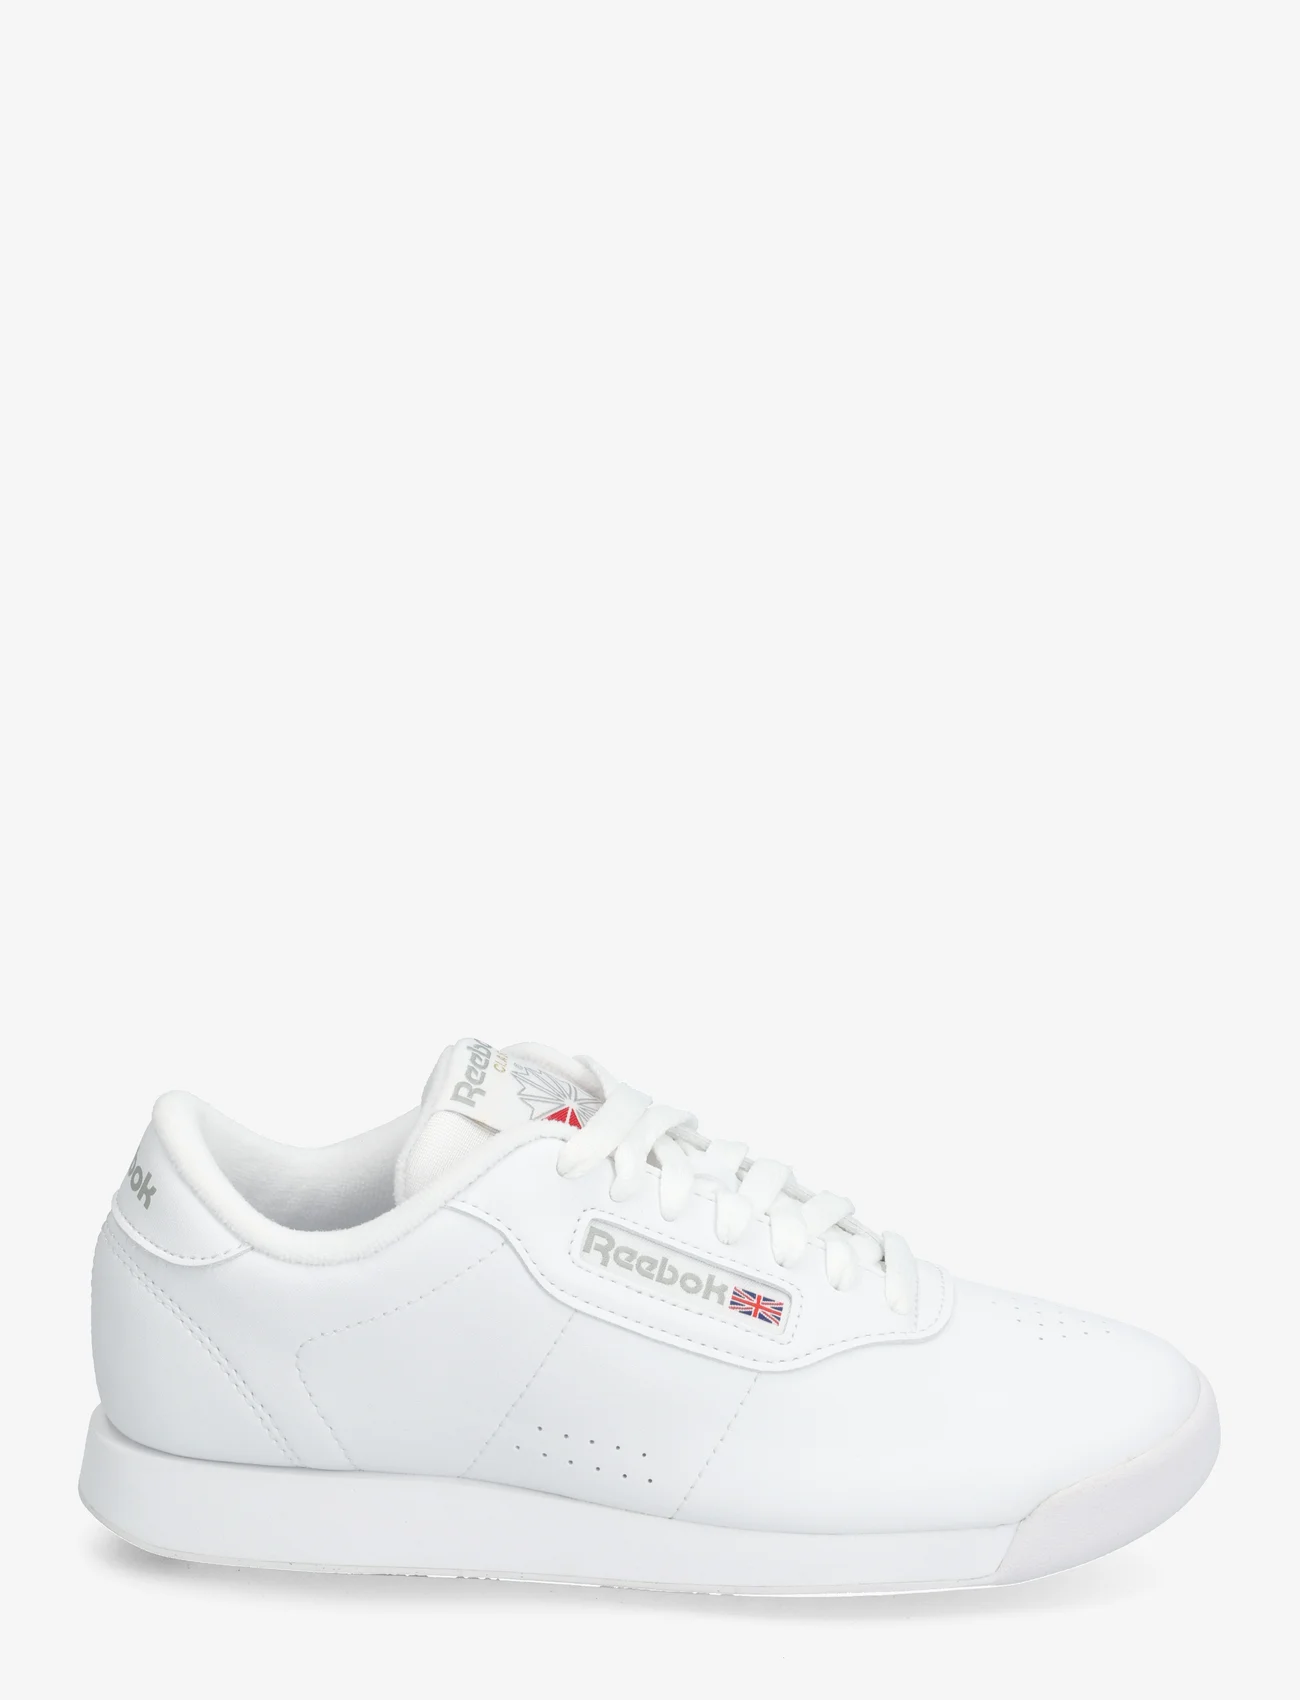 Reebok Classics - PRINCESS - lage sneakers - us-white - 1